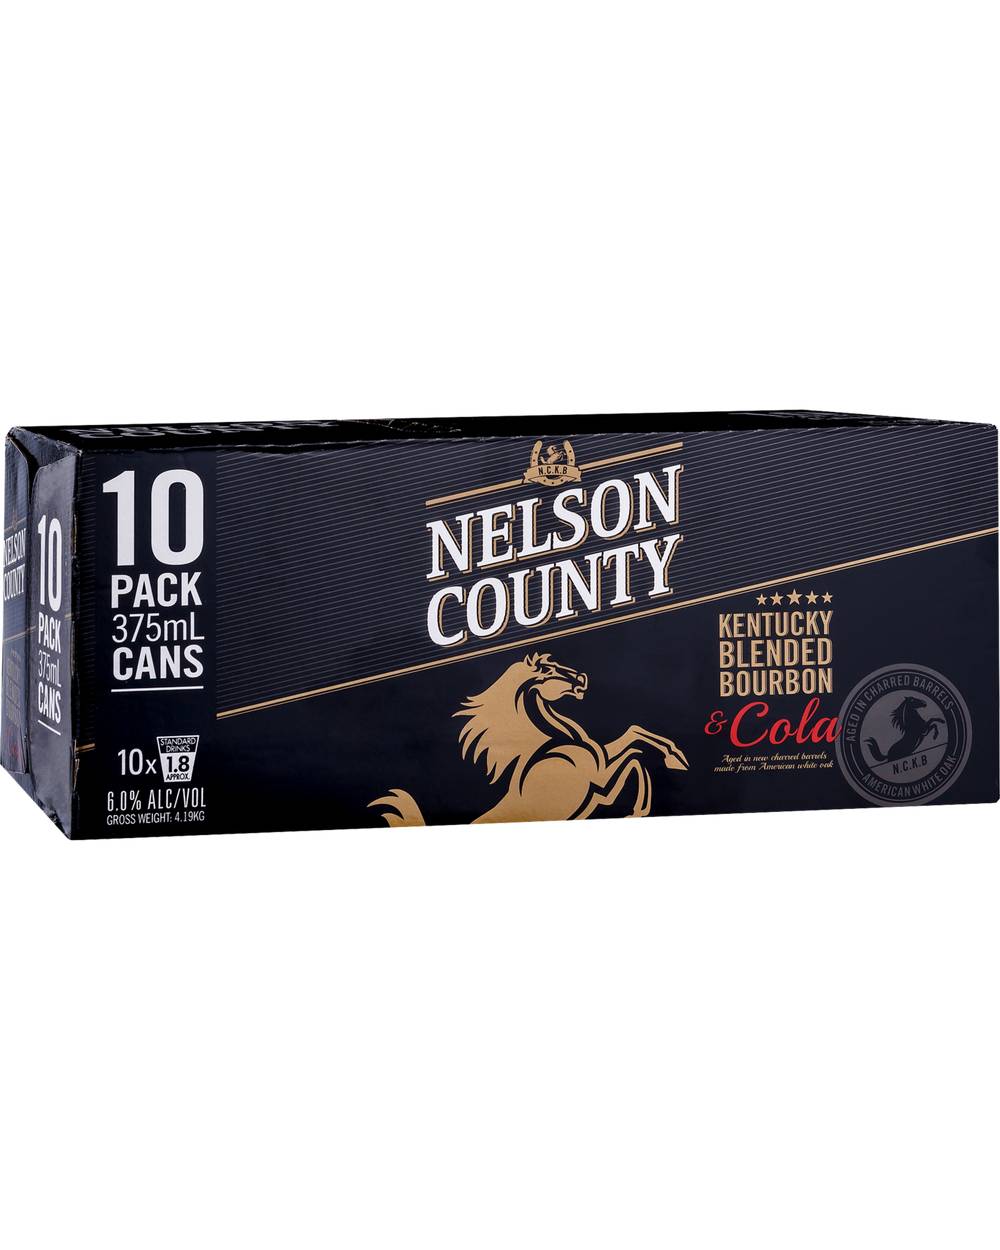 Nelson County Bourbon & Cola Black 10x375ml